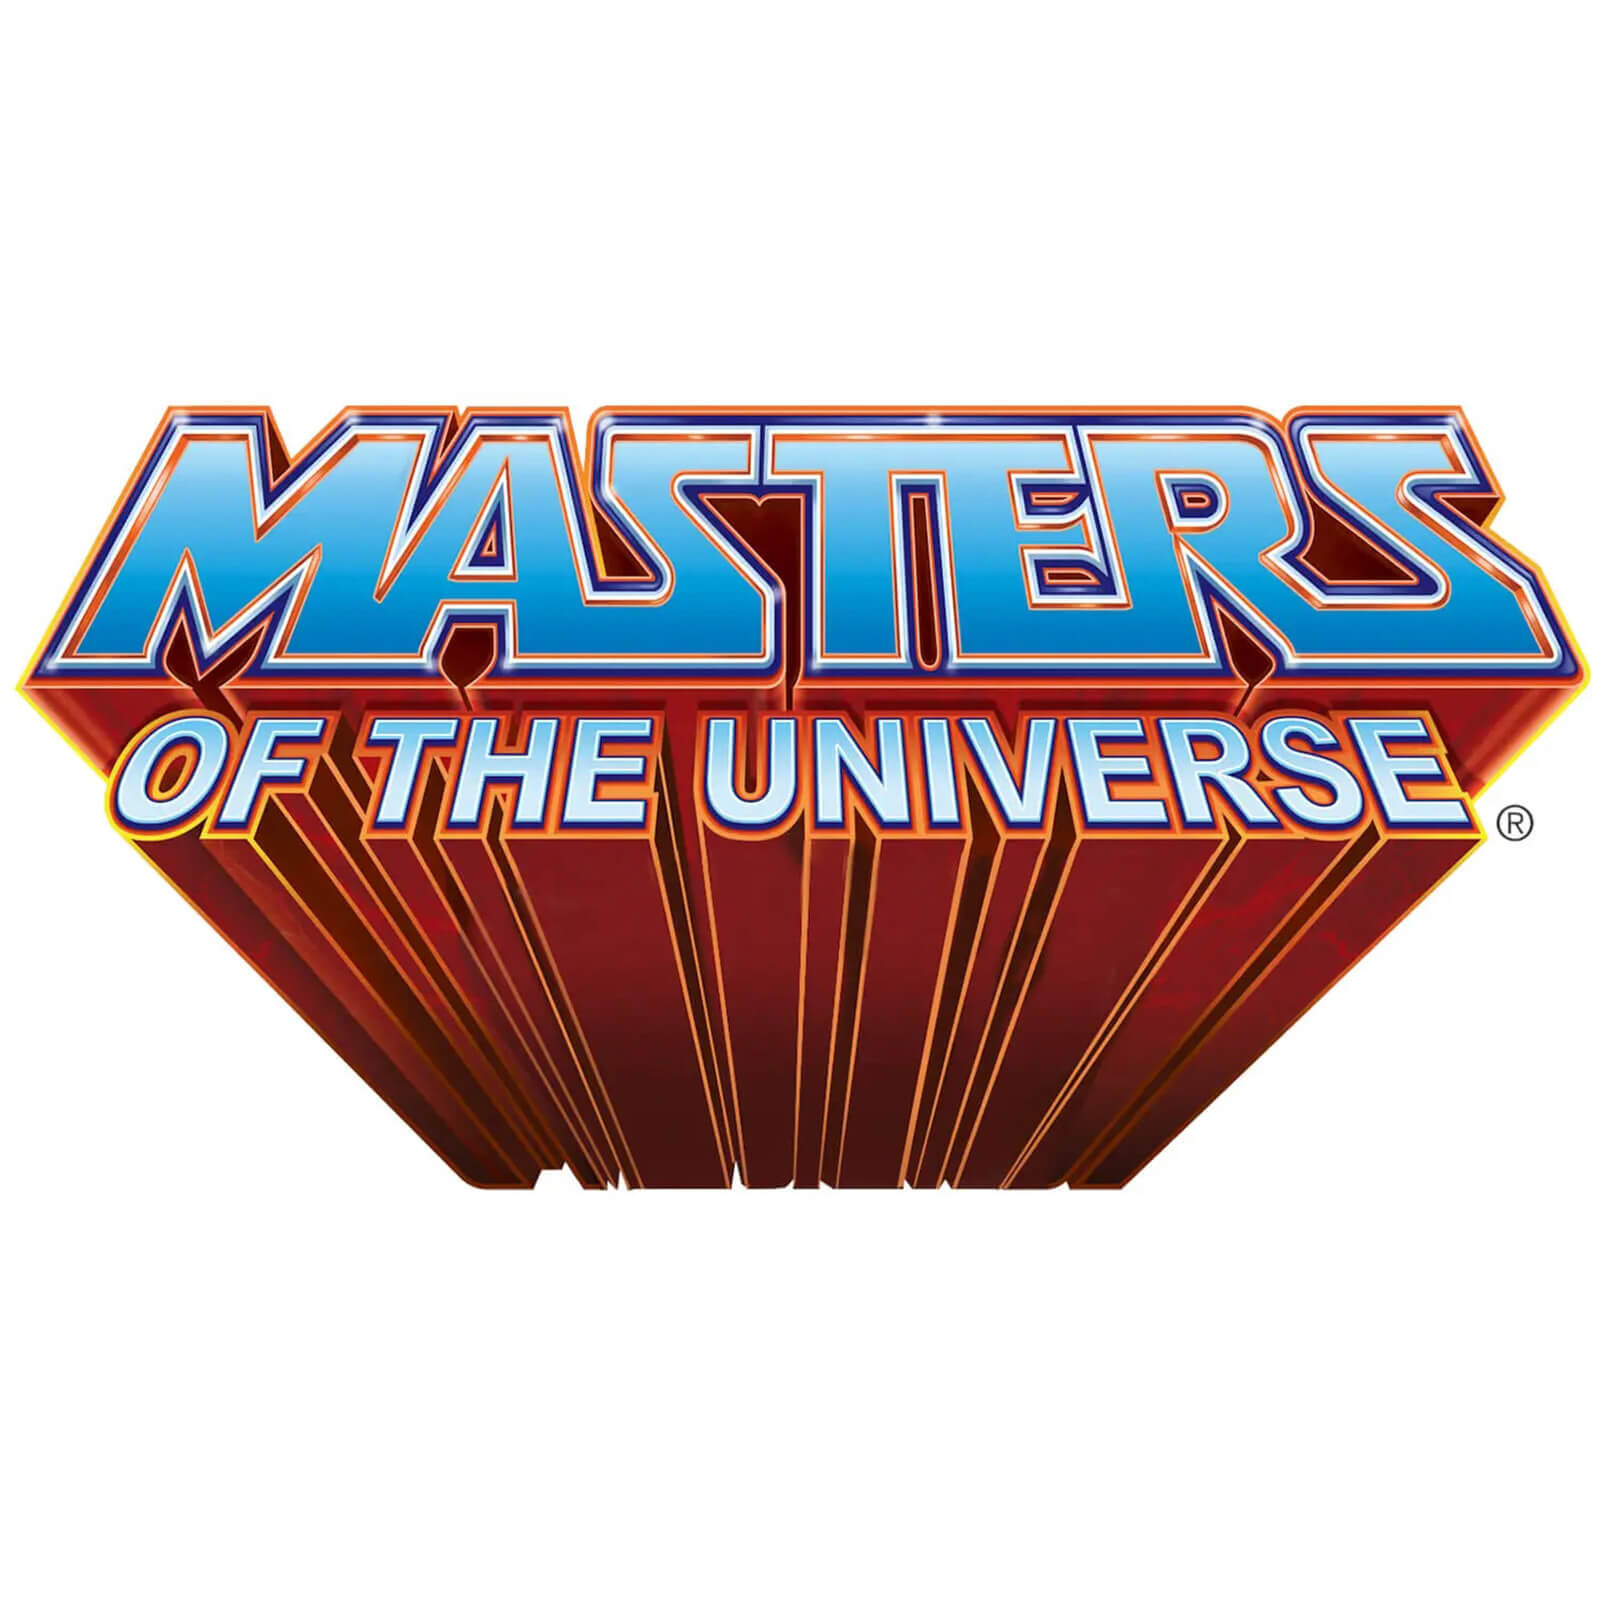 Mattel Masters of the Universe: Revelation Masterverse Action Figure - Viking He-Man